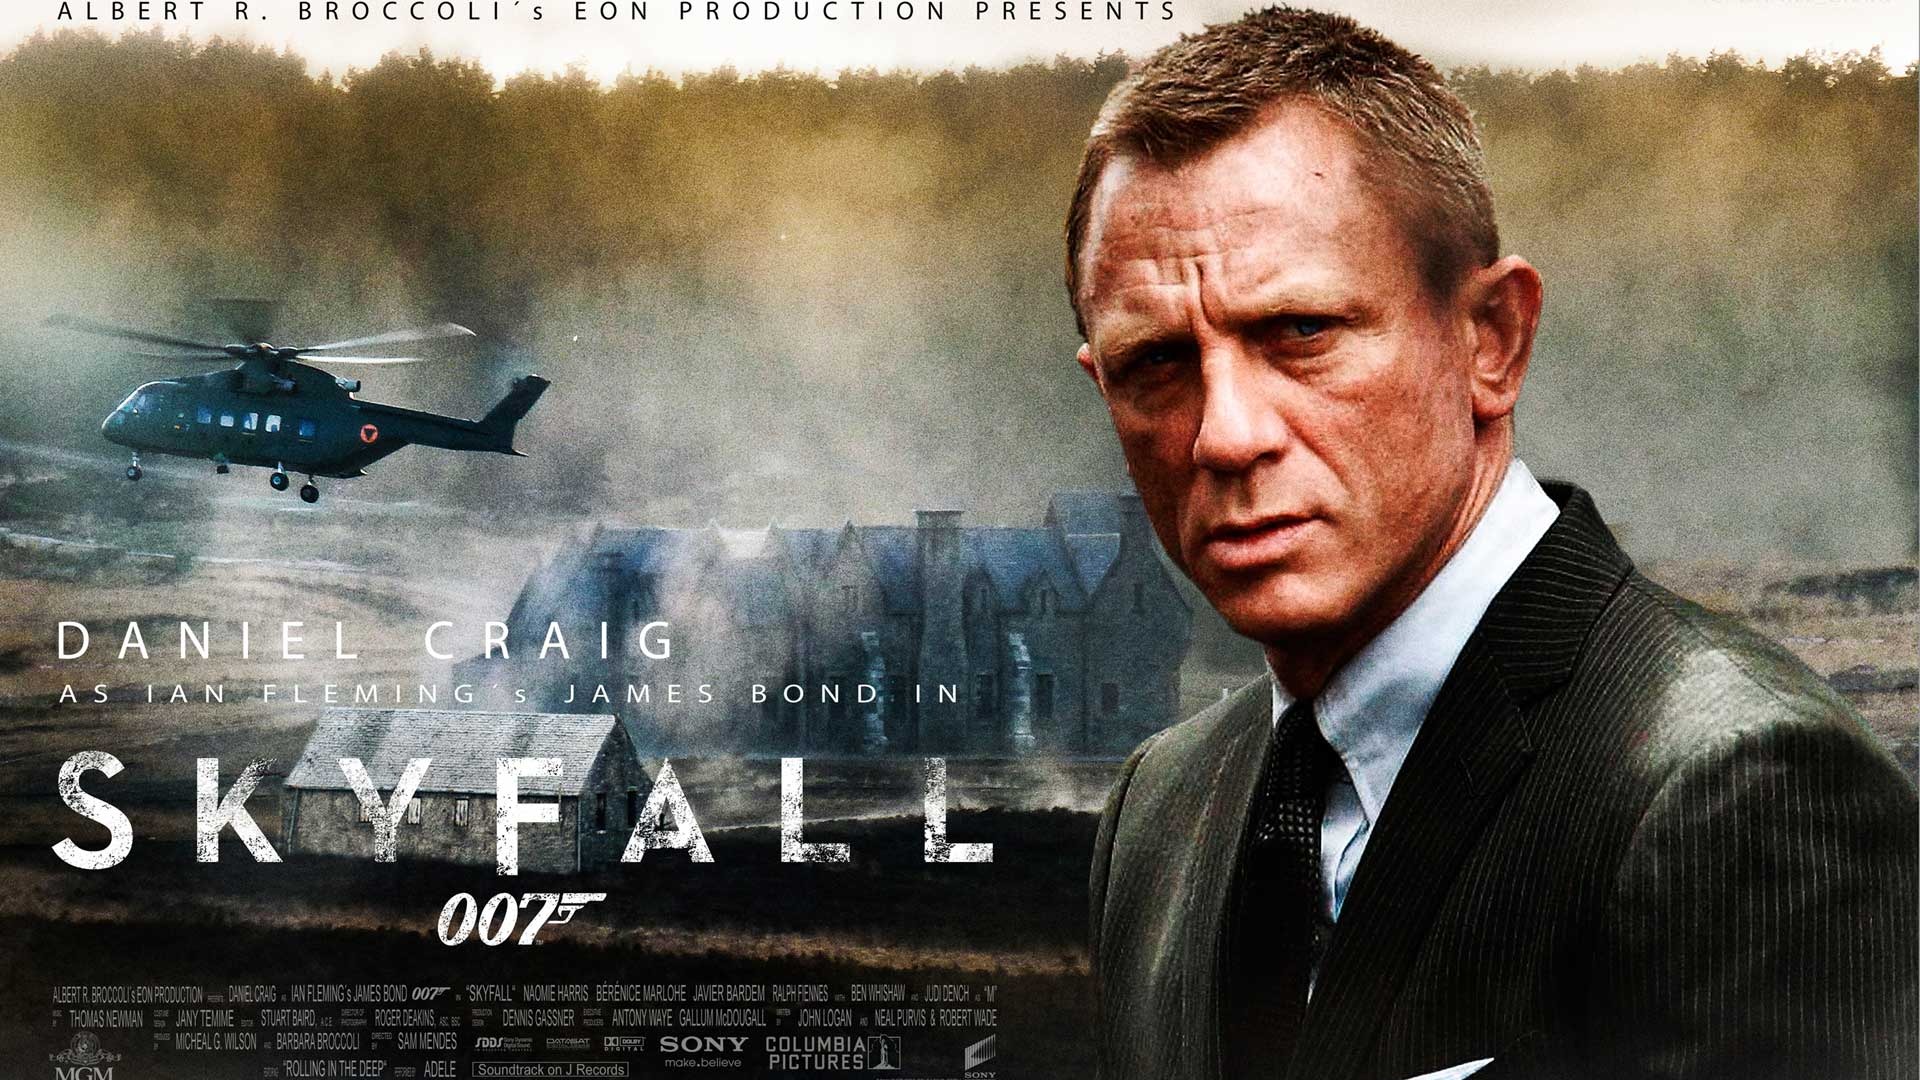 007 Skyfall 2012 Movie HD Desktop Wallpapers 02 - 1920x1080 ...